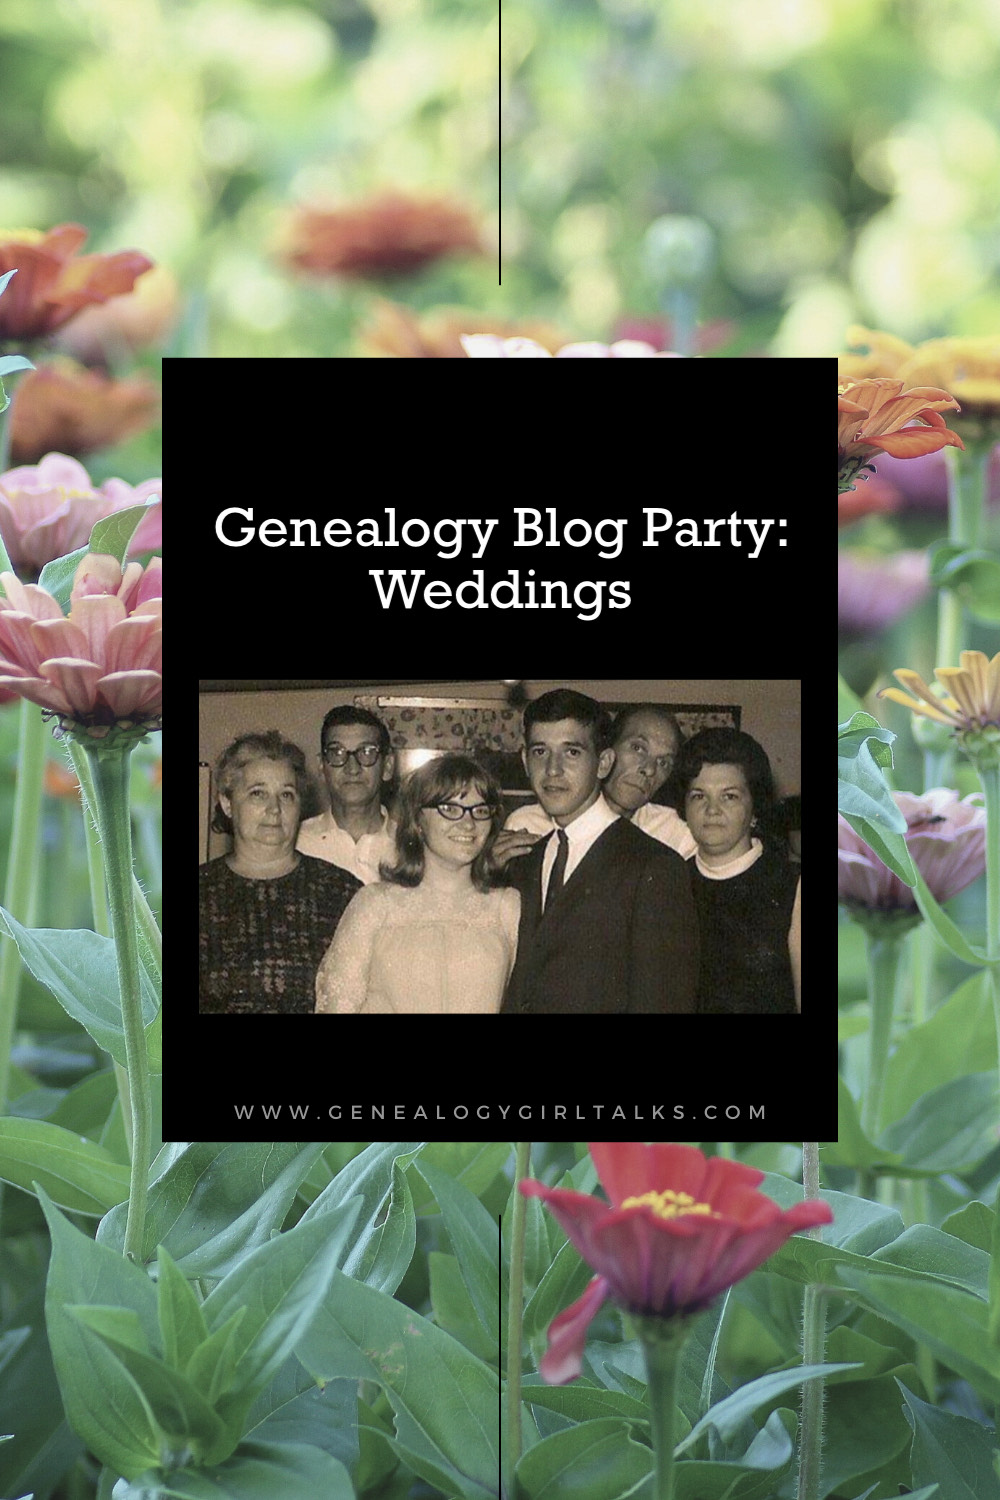 THE GENEALOGY BLOG PARTY: WEDDINGS by Genealogy Girl Talks